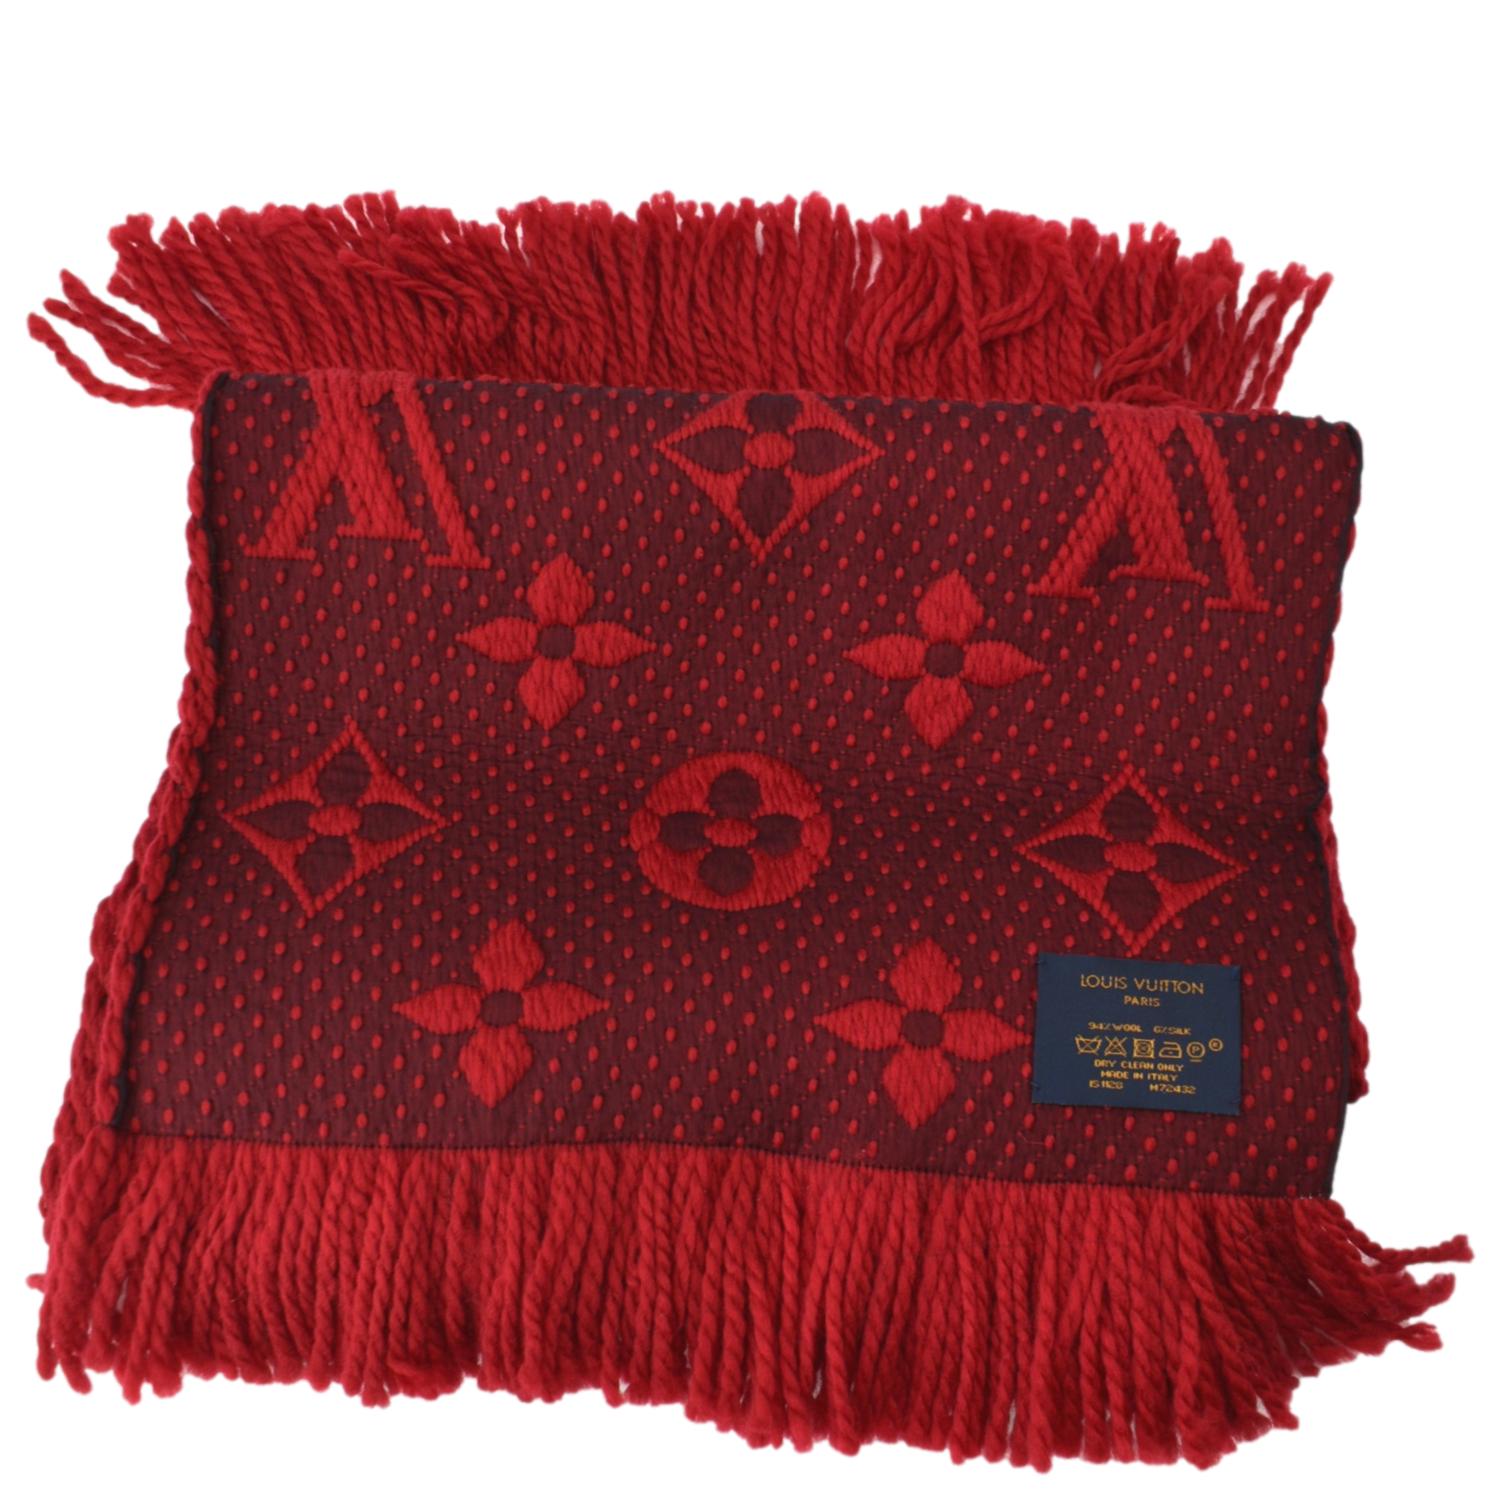 Logomania wool scarf